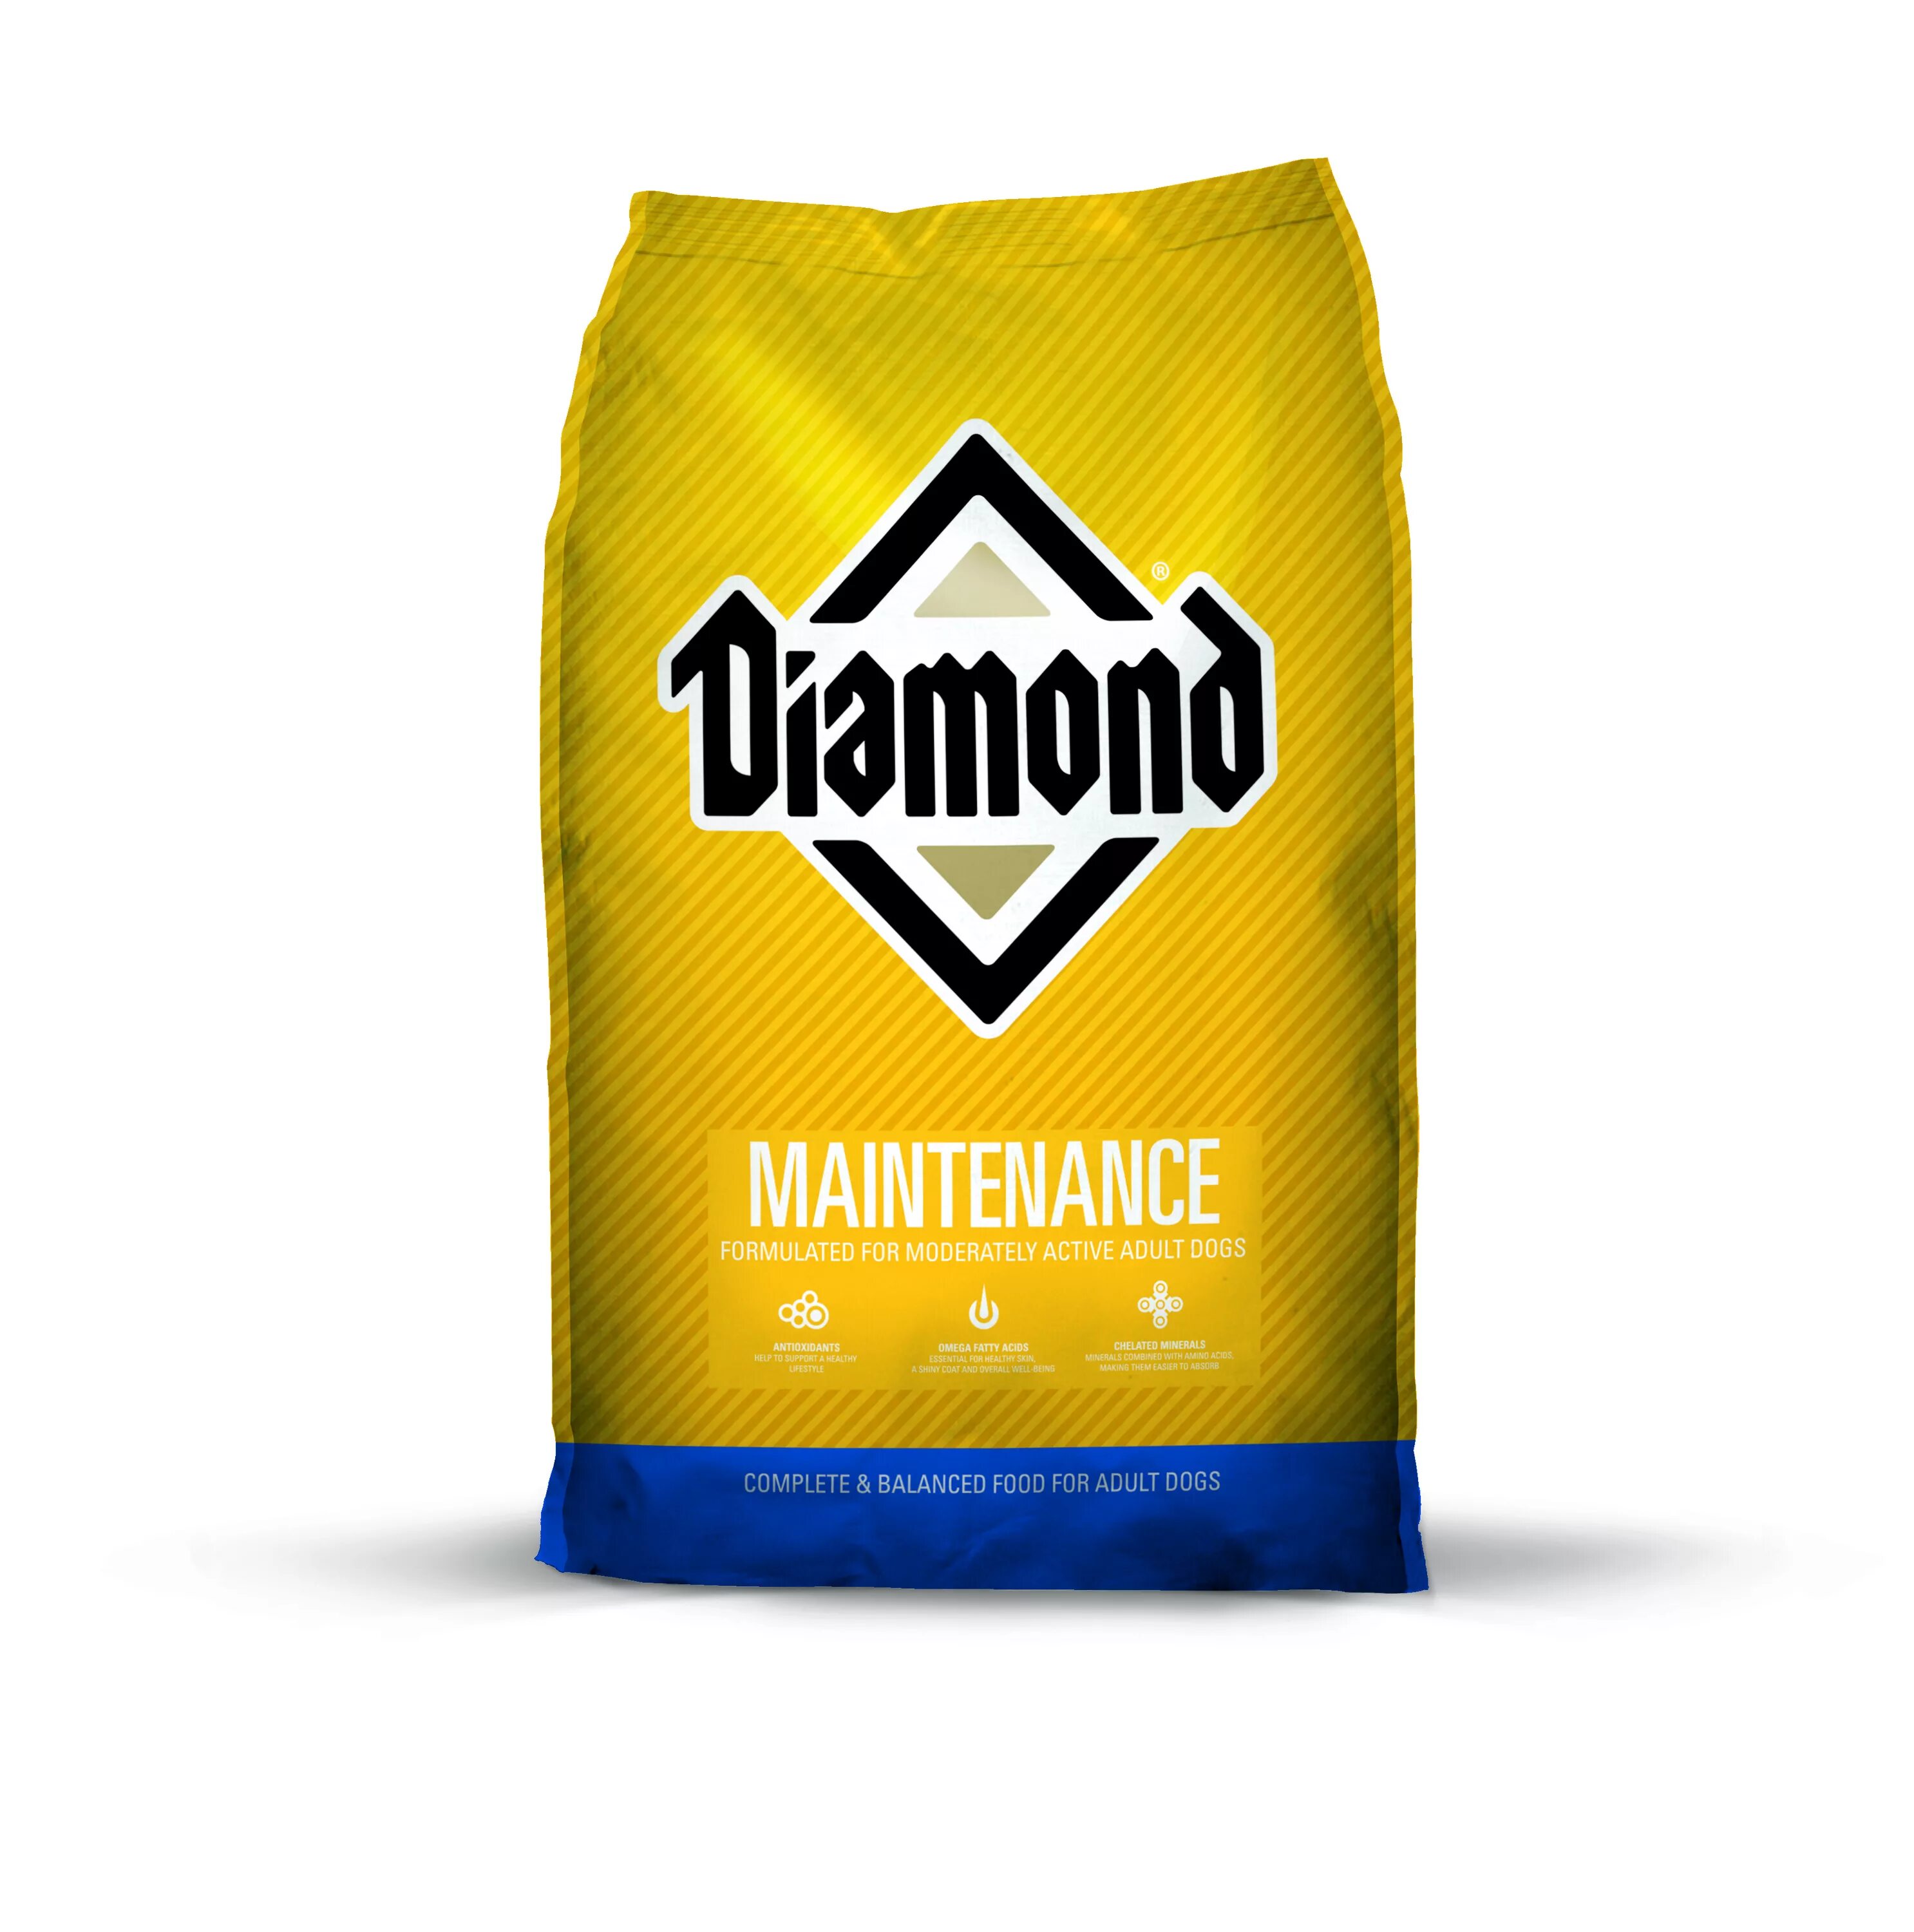 Diamond pet. Даймонд фуд. Diamond naturals Dog food. Diamond ideal products logo.